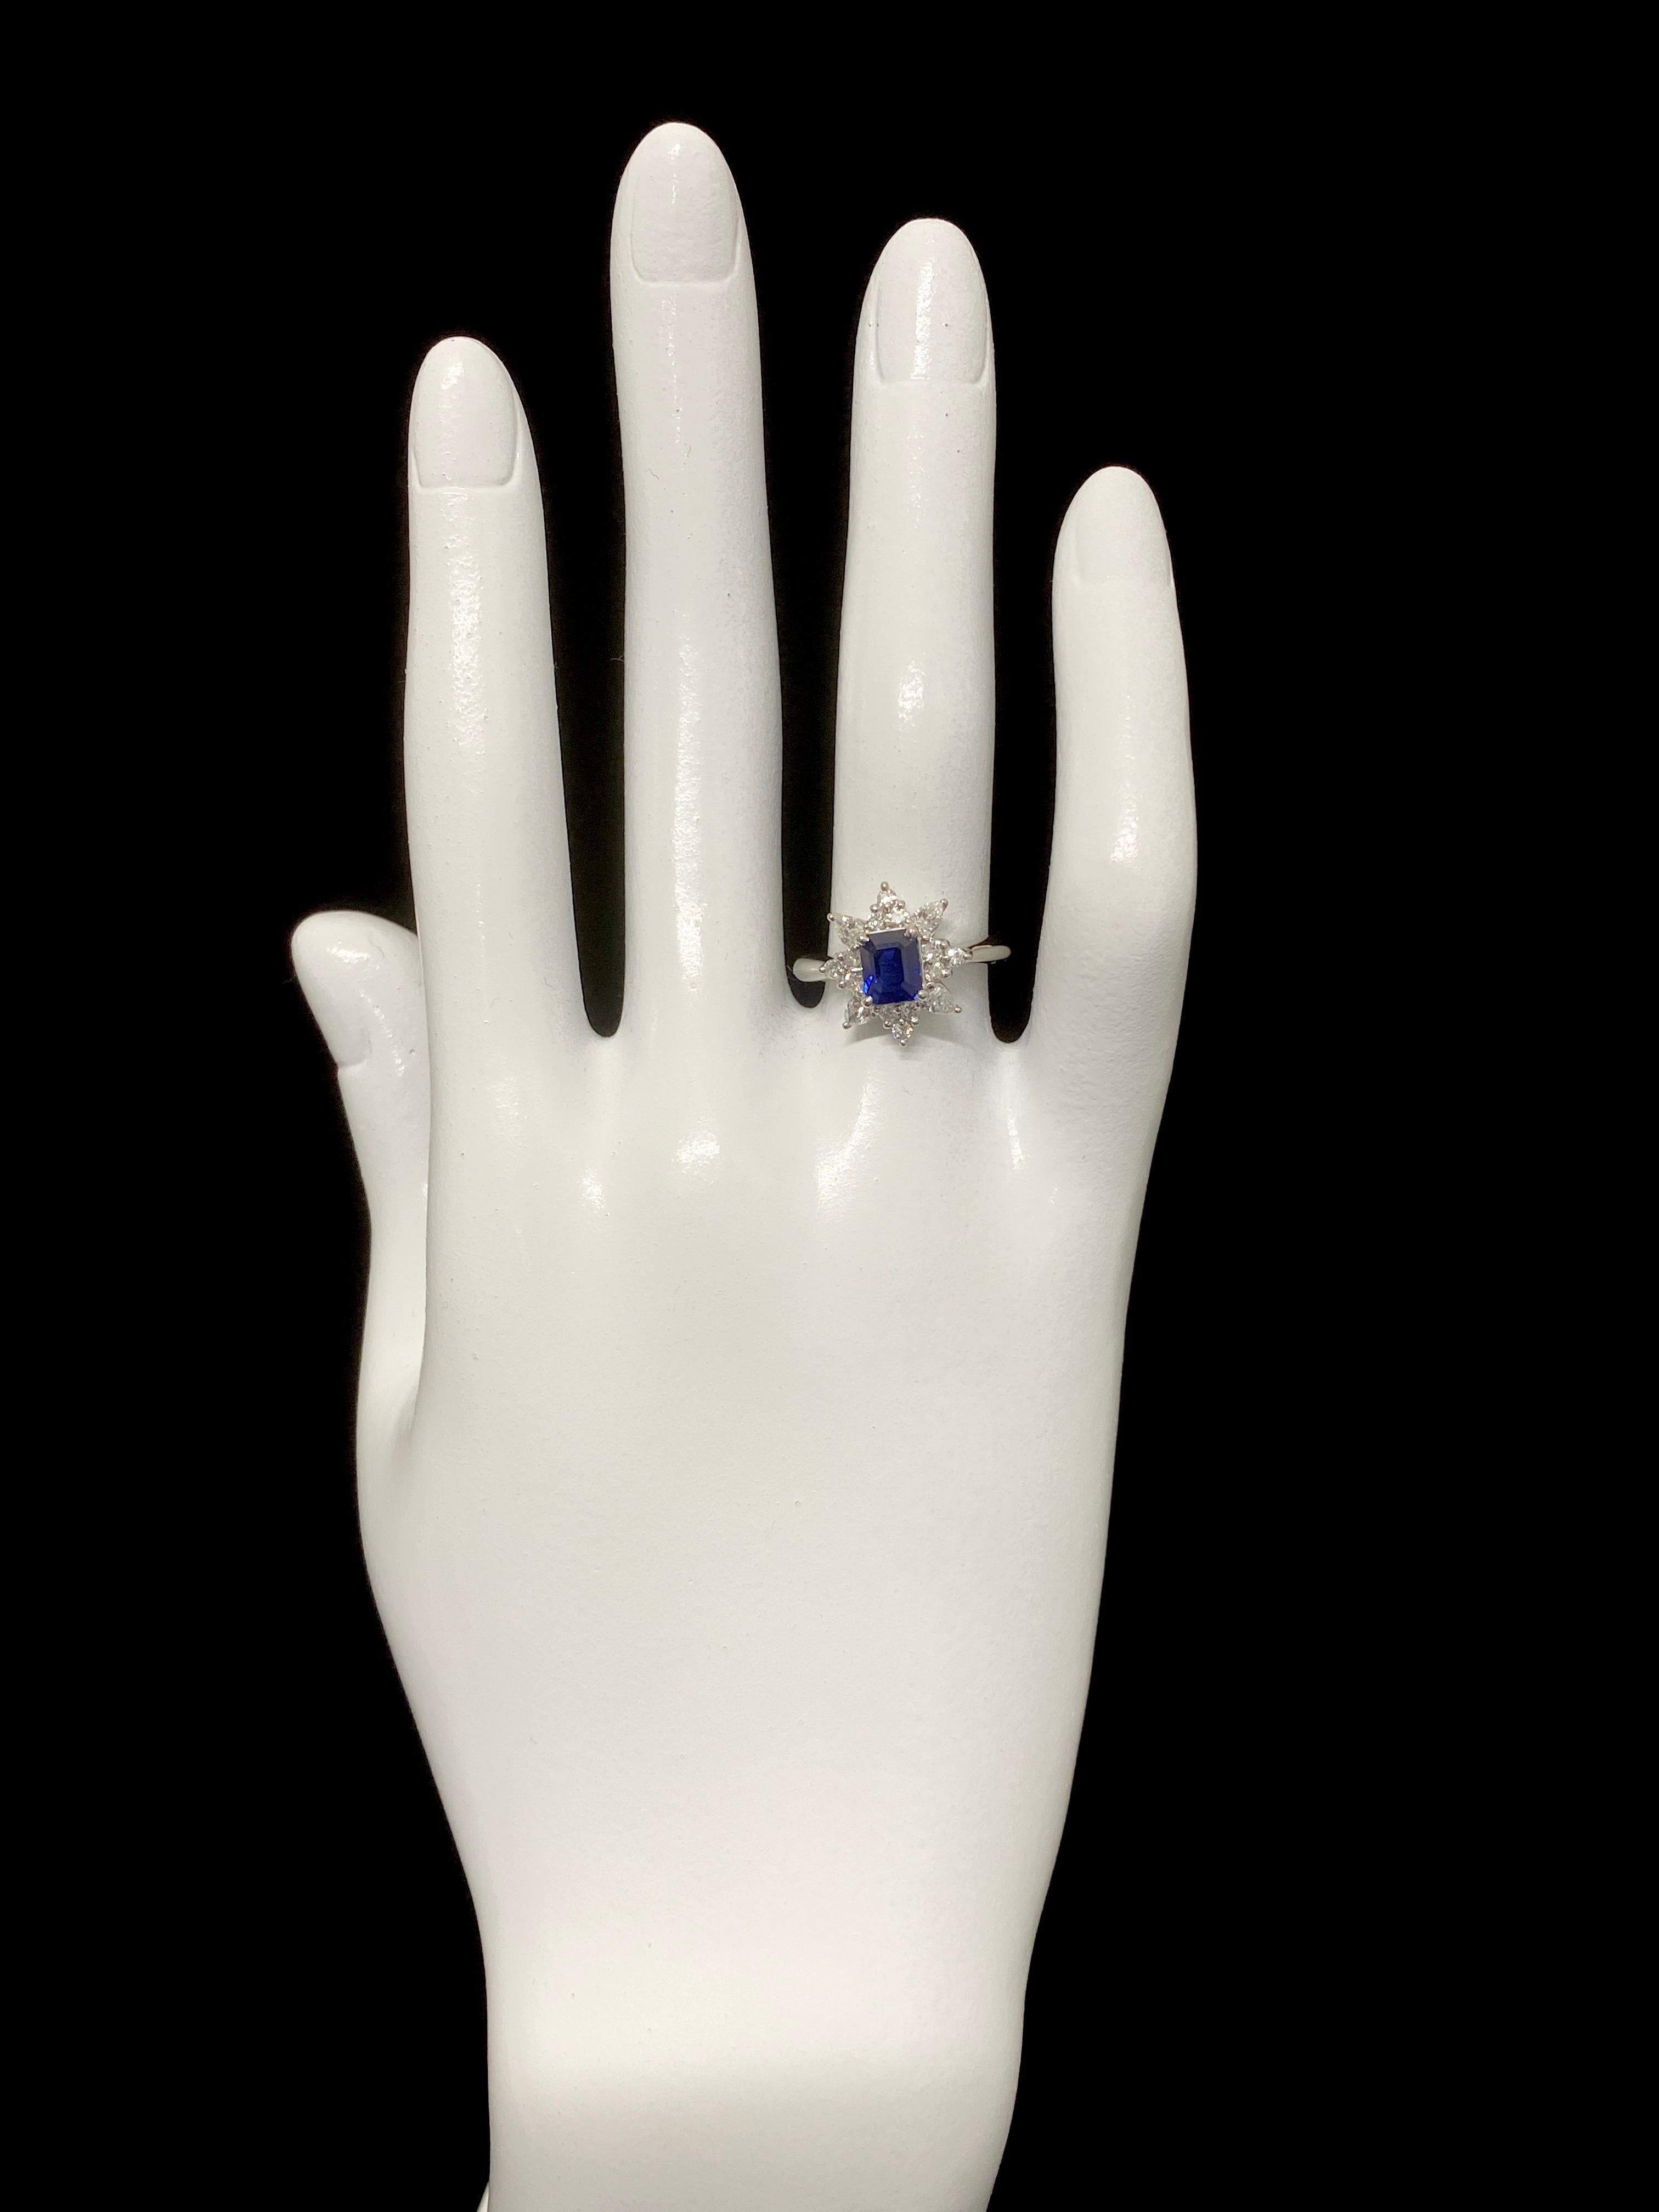 Emerald Cut 1.23 Carat Natural Emerald-Cut Sapphire and Diamond Halo Ring Set in Platinum